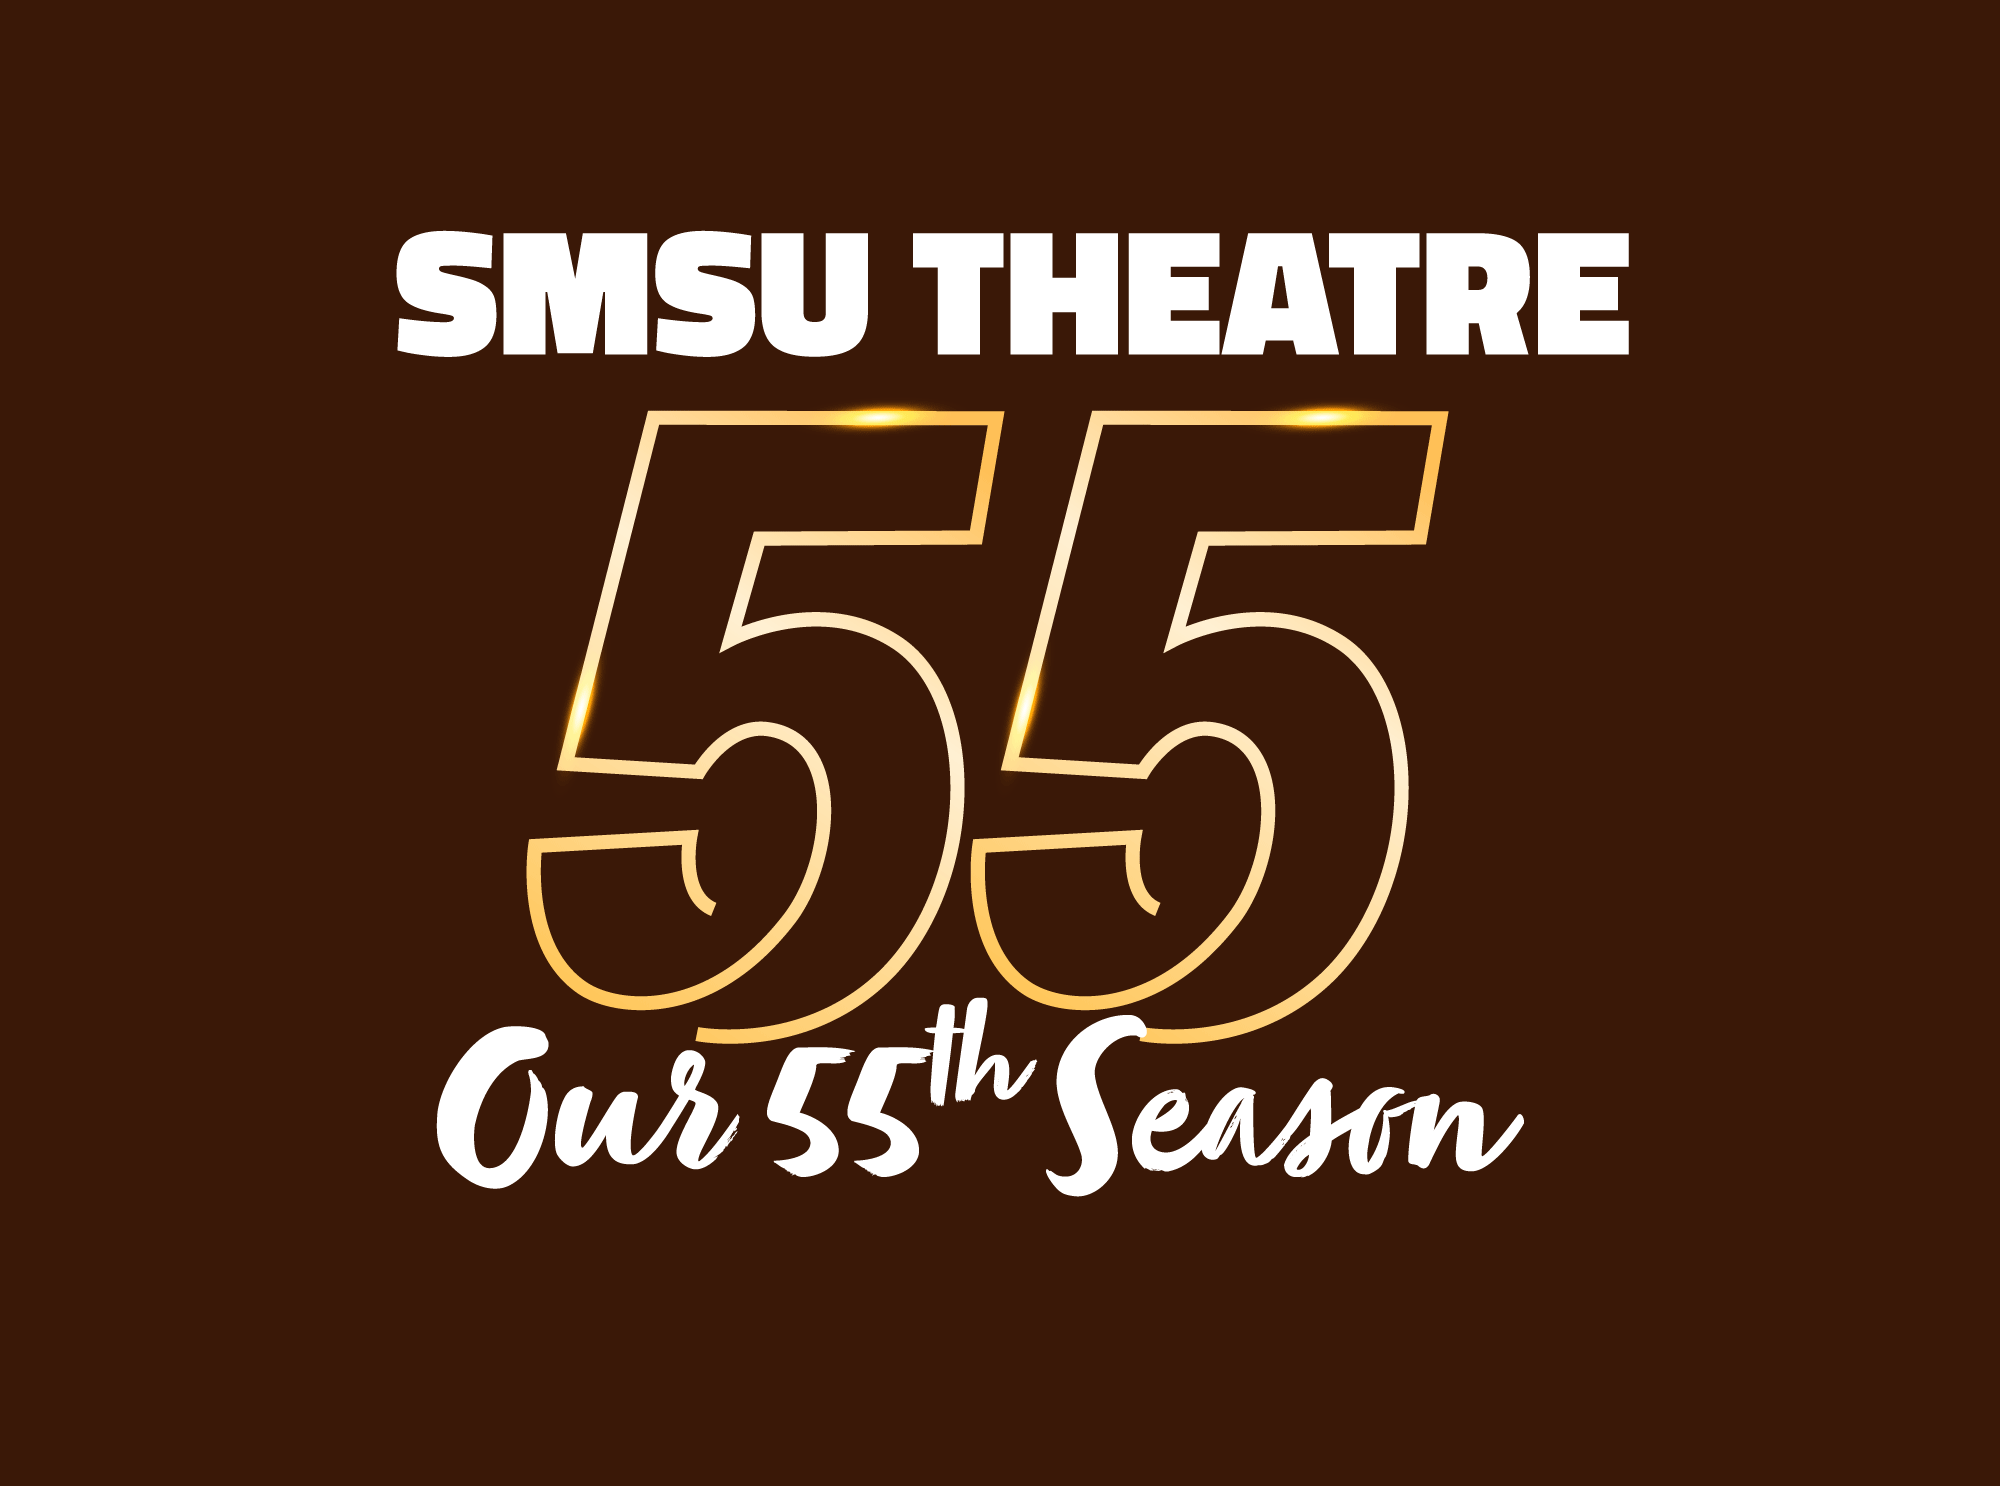 SMSU Theatre Opens 55th Season  Featured Image